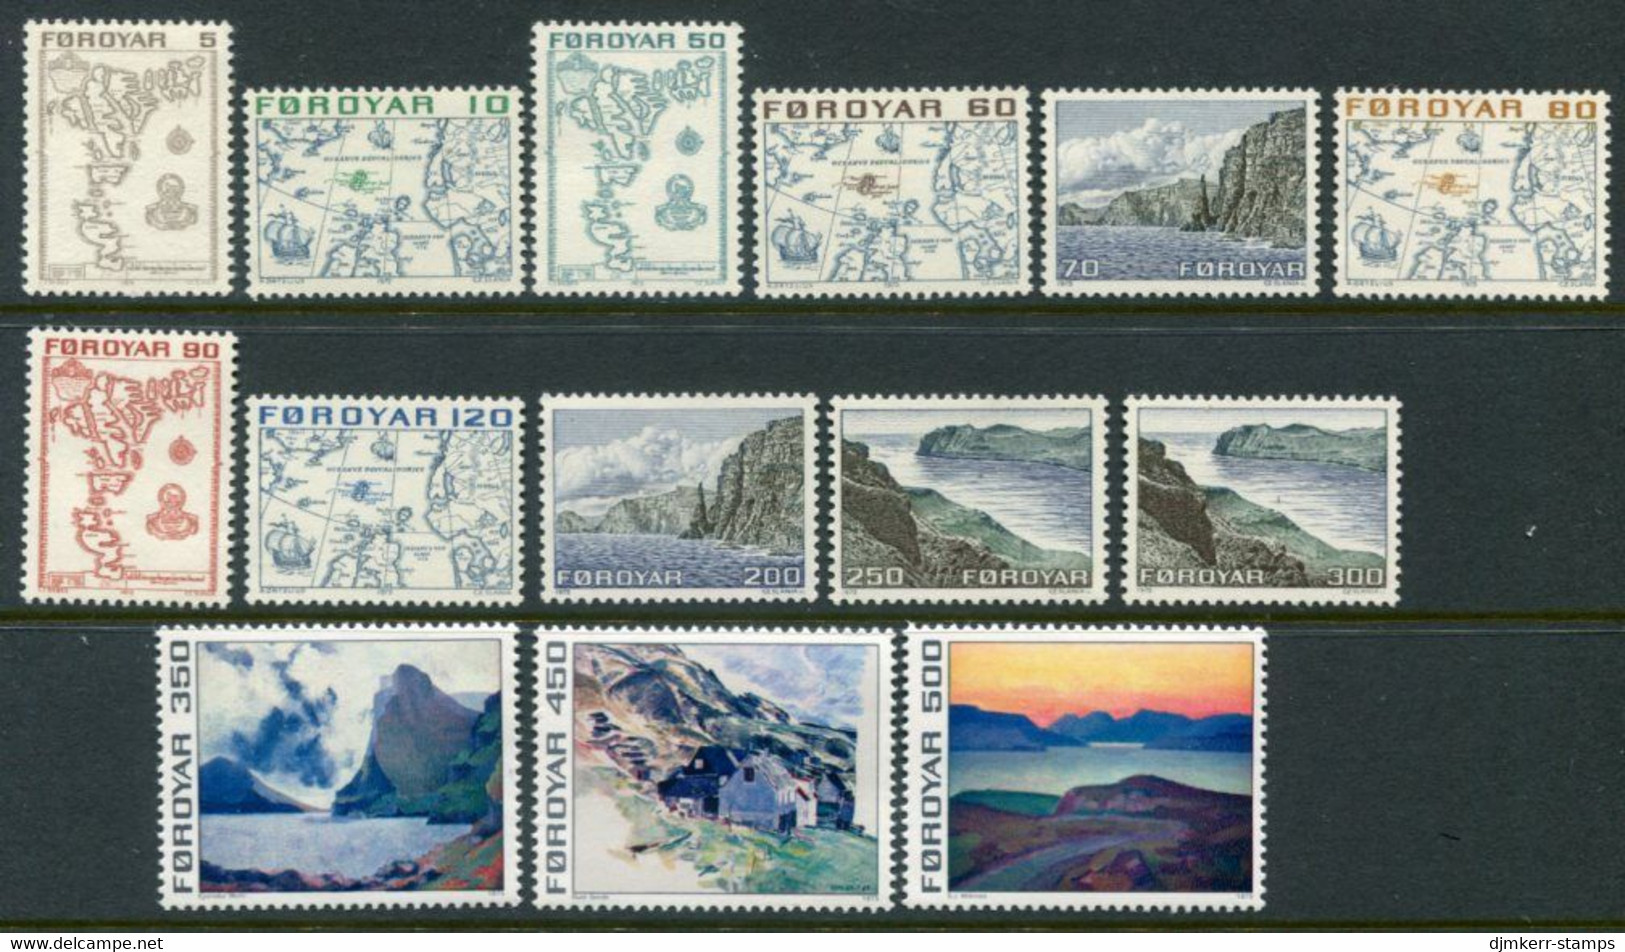 FAEROE ISLANDS 1975 Definitive Set Of 14 MNH / **.  Michel 7-20 - Färöer Inseln